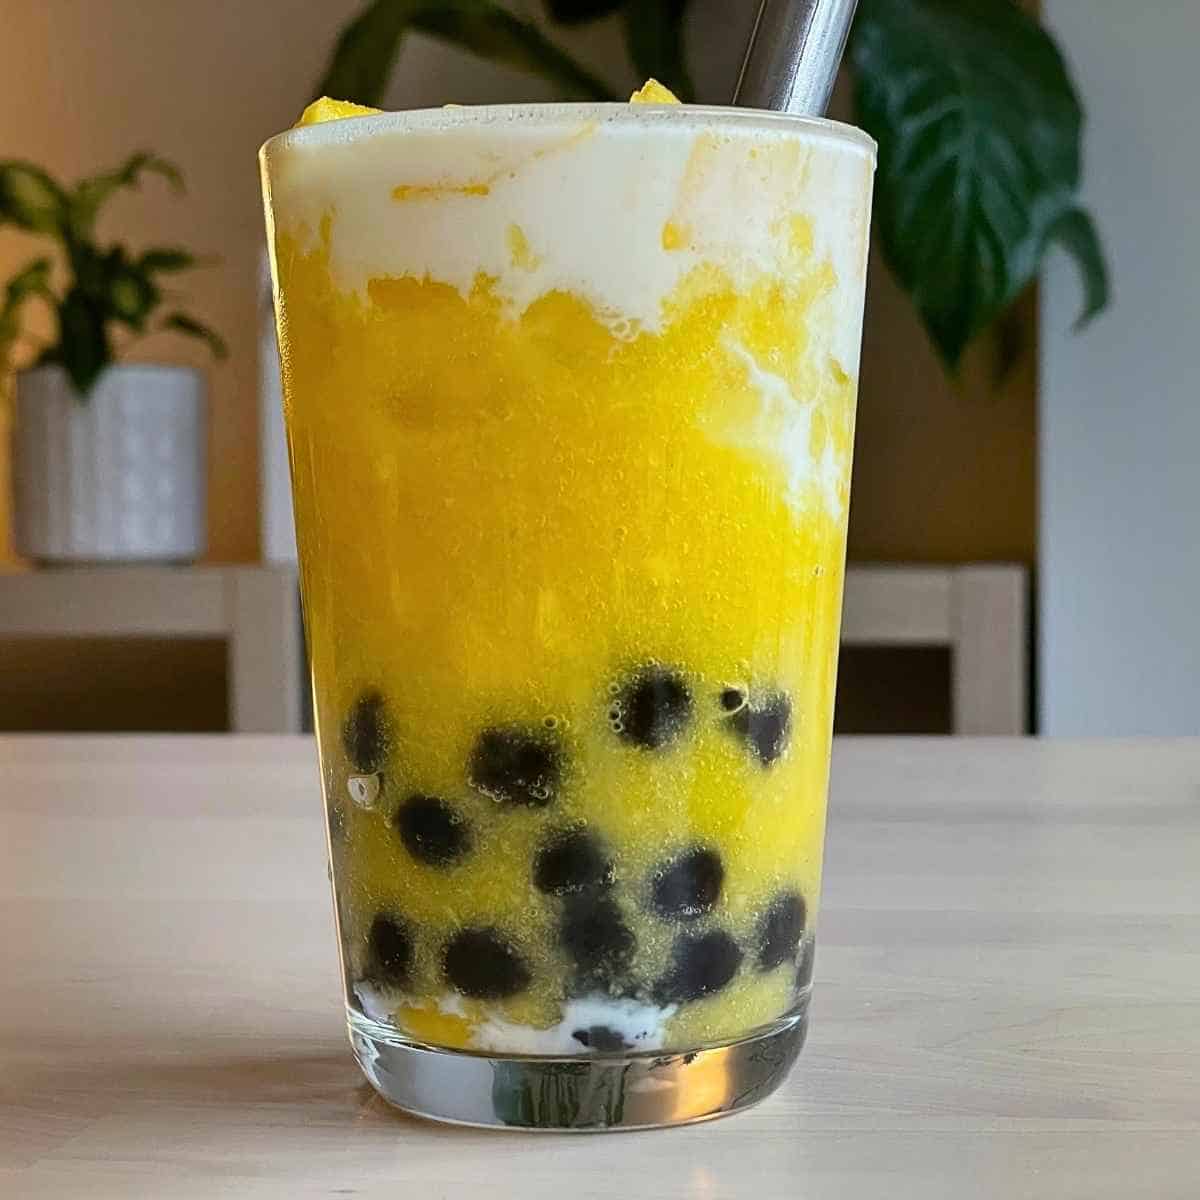 Mango bubble tea without tea